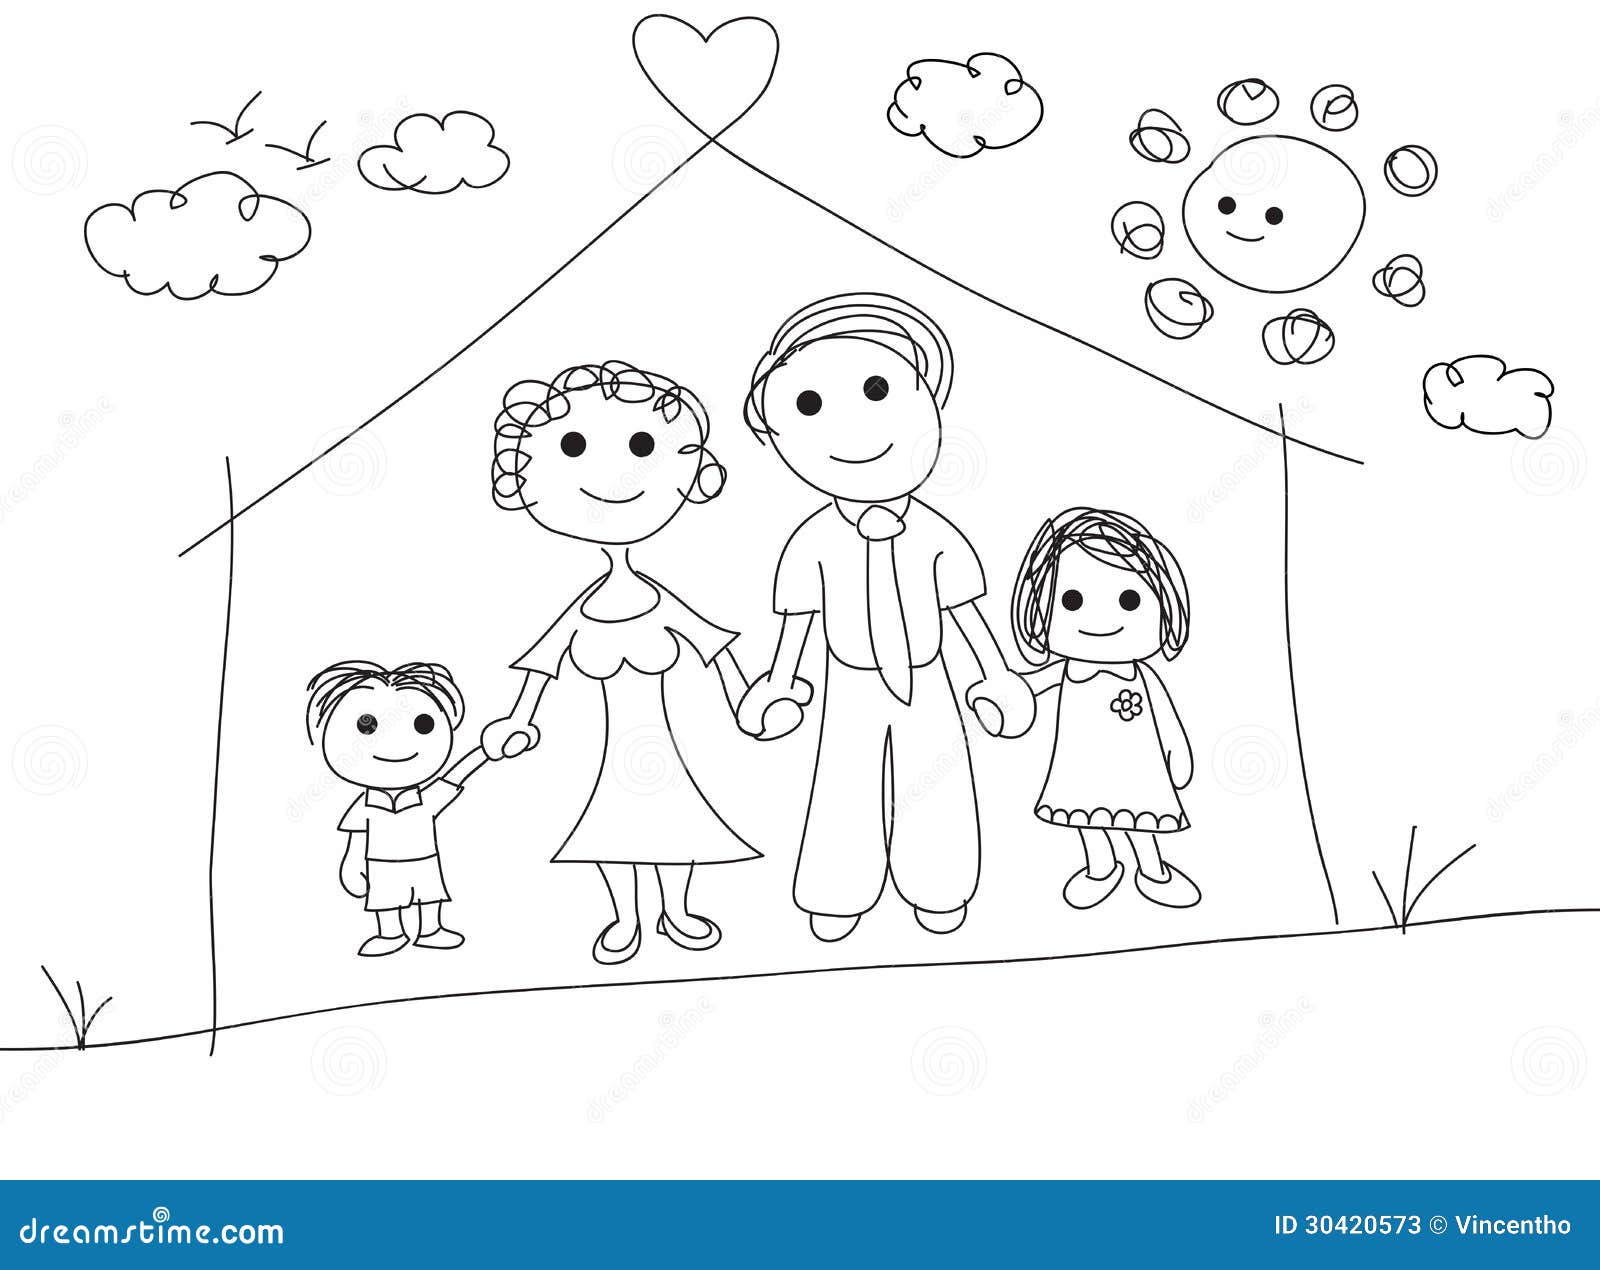 My Family: Kindergarten Social Studies | The Self-Regulated Teacher